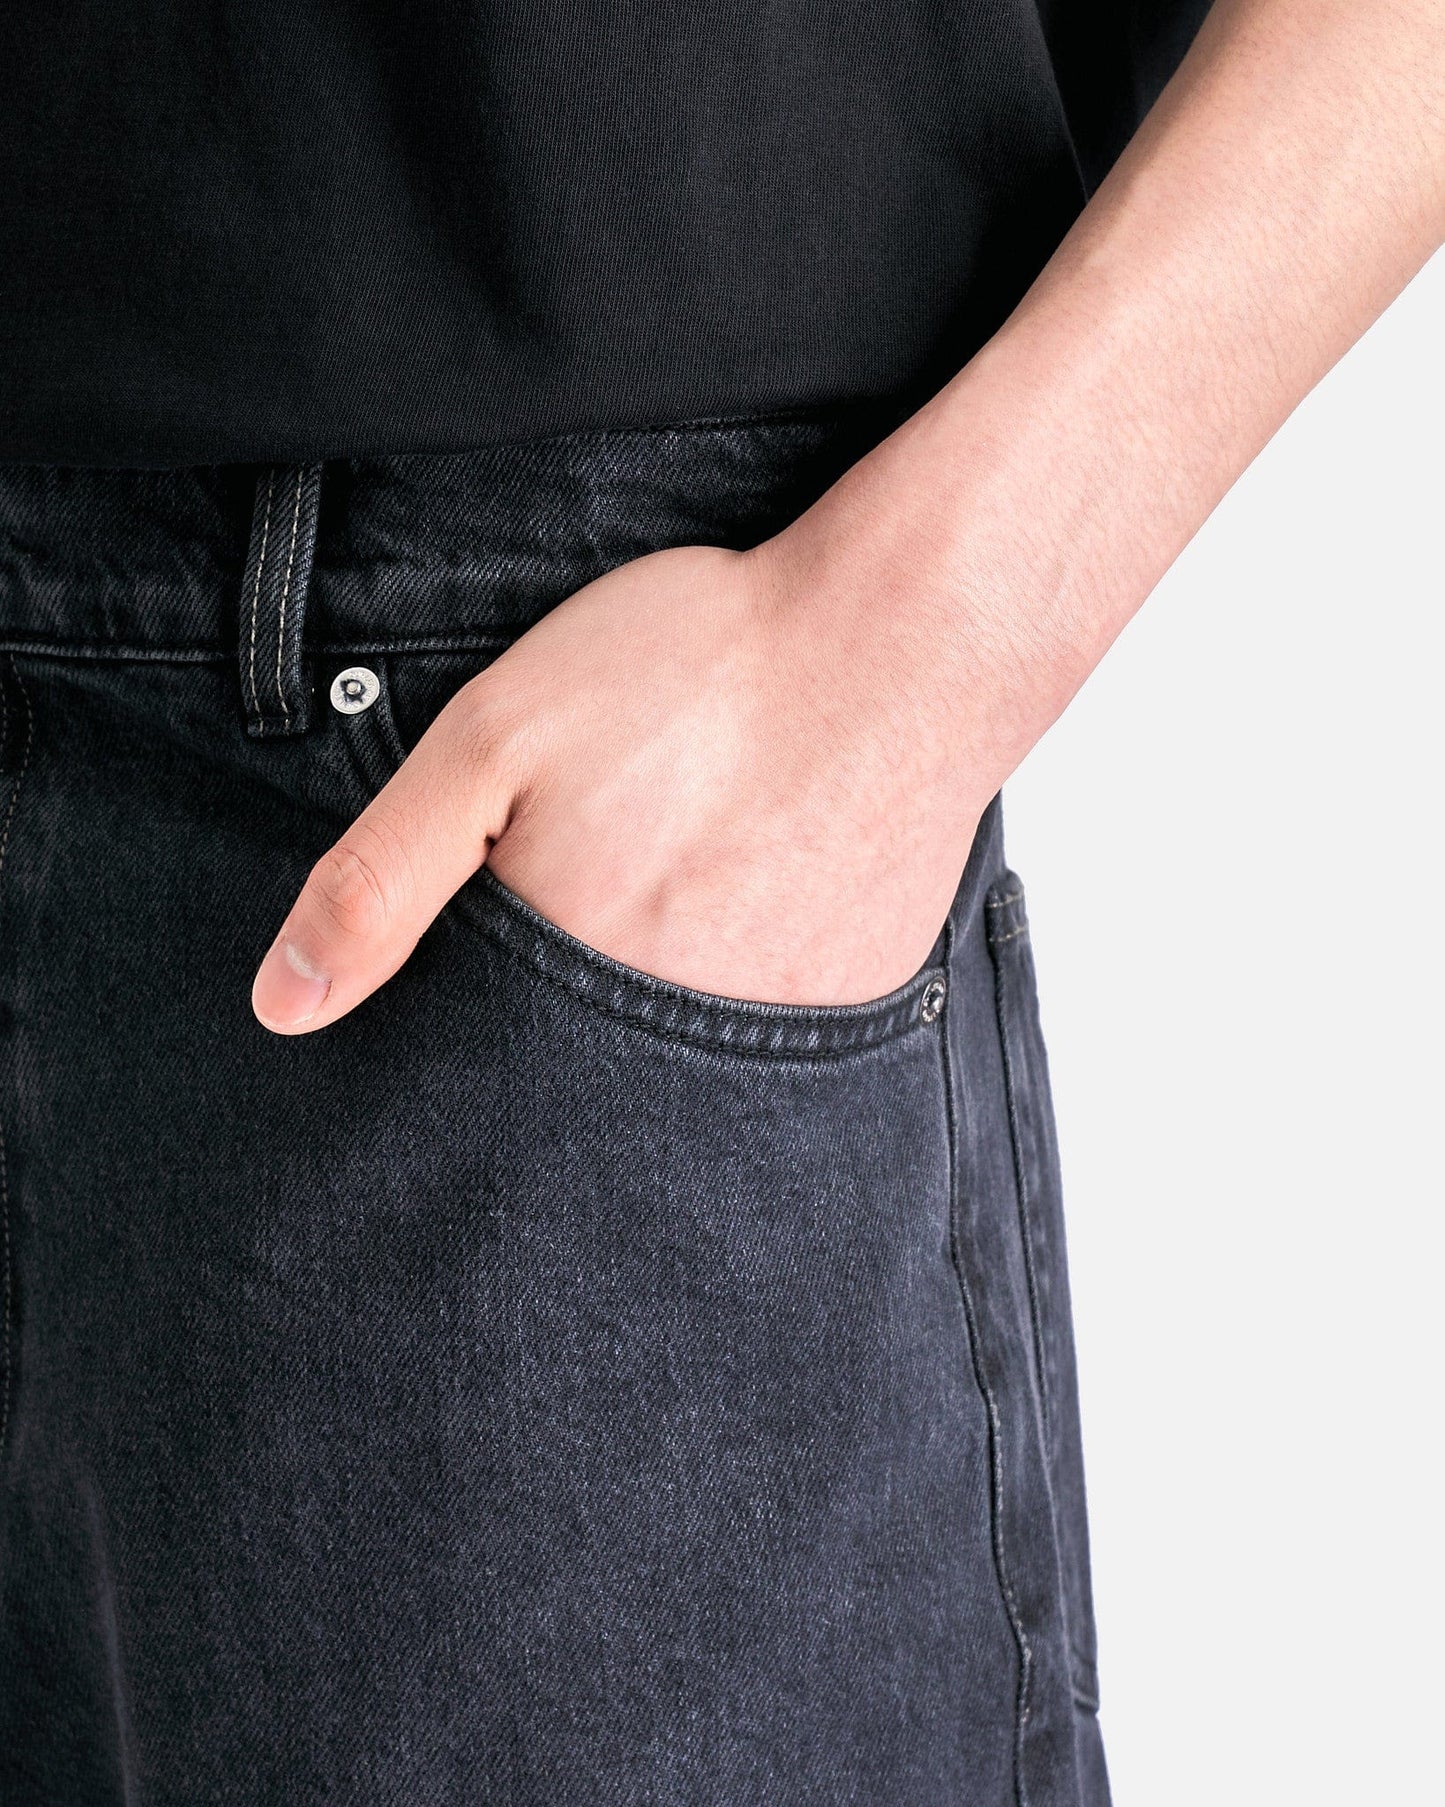 Our Legacy Men's Jeans Vast Cut in Washed Black Denim